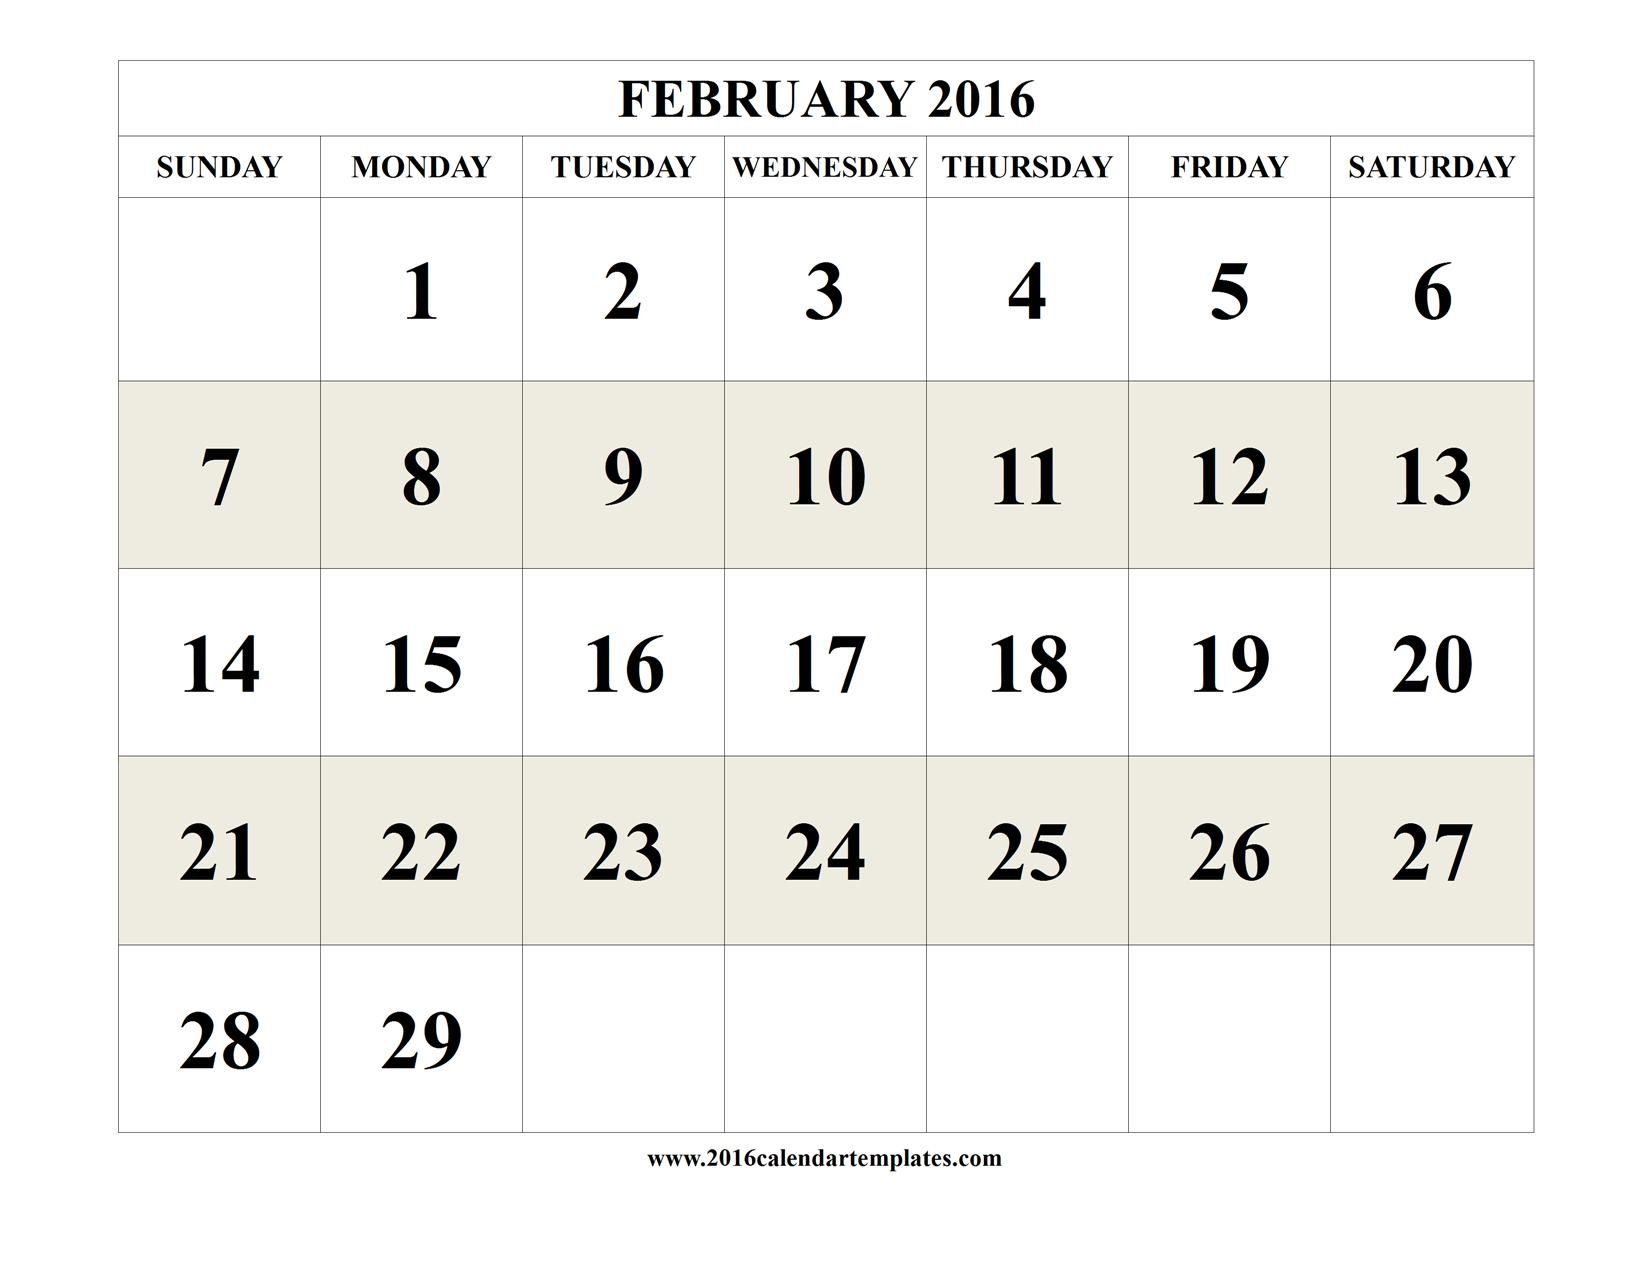 365 Days Numbered Calendar :-Free Calendar Template